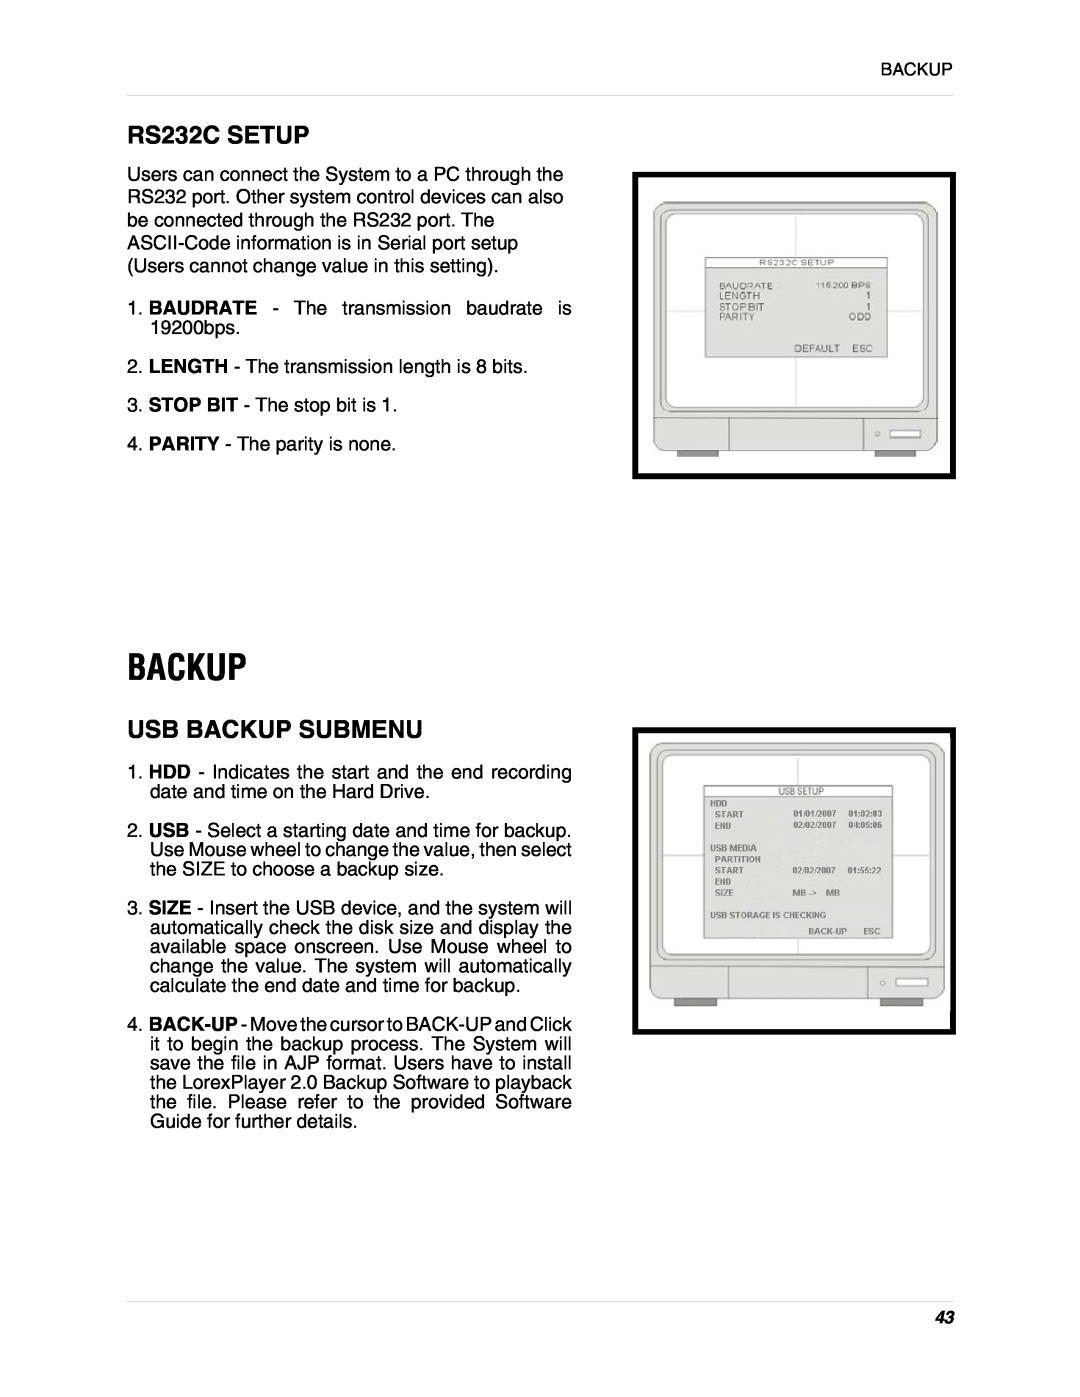 LOREX Technology L15D400 instruction manual RS232C SETUP, Usb Backup Submenu 